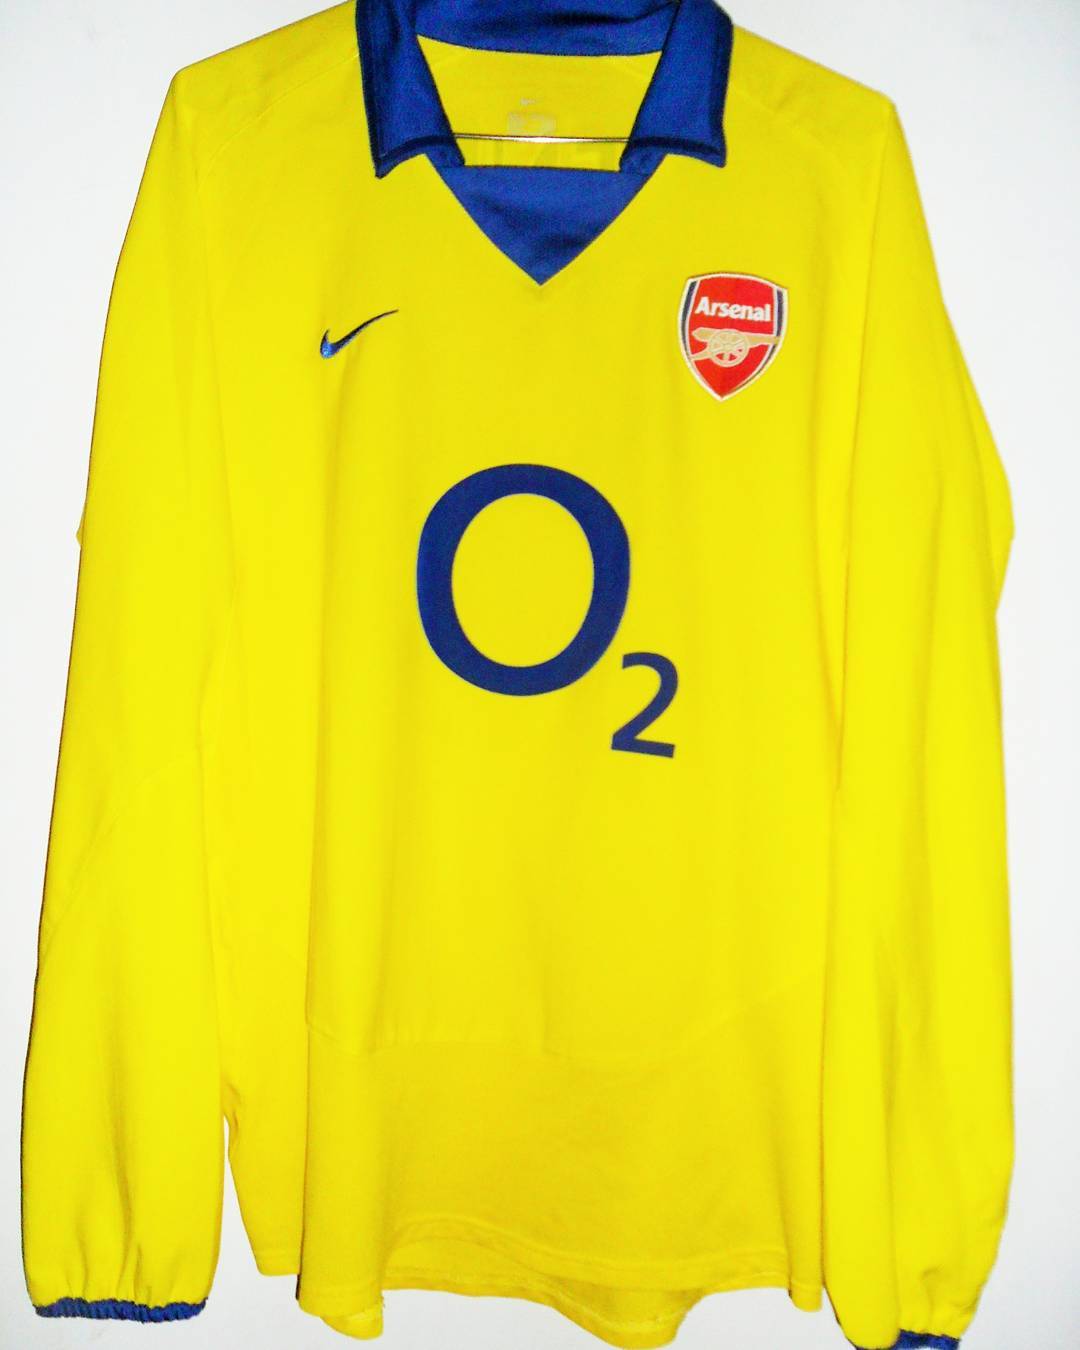 Arsenal Extérieur Maillot de foot 2003 - 2004. Sponsored by O2